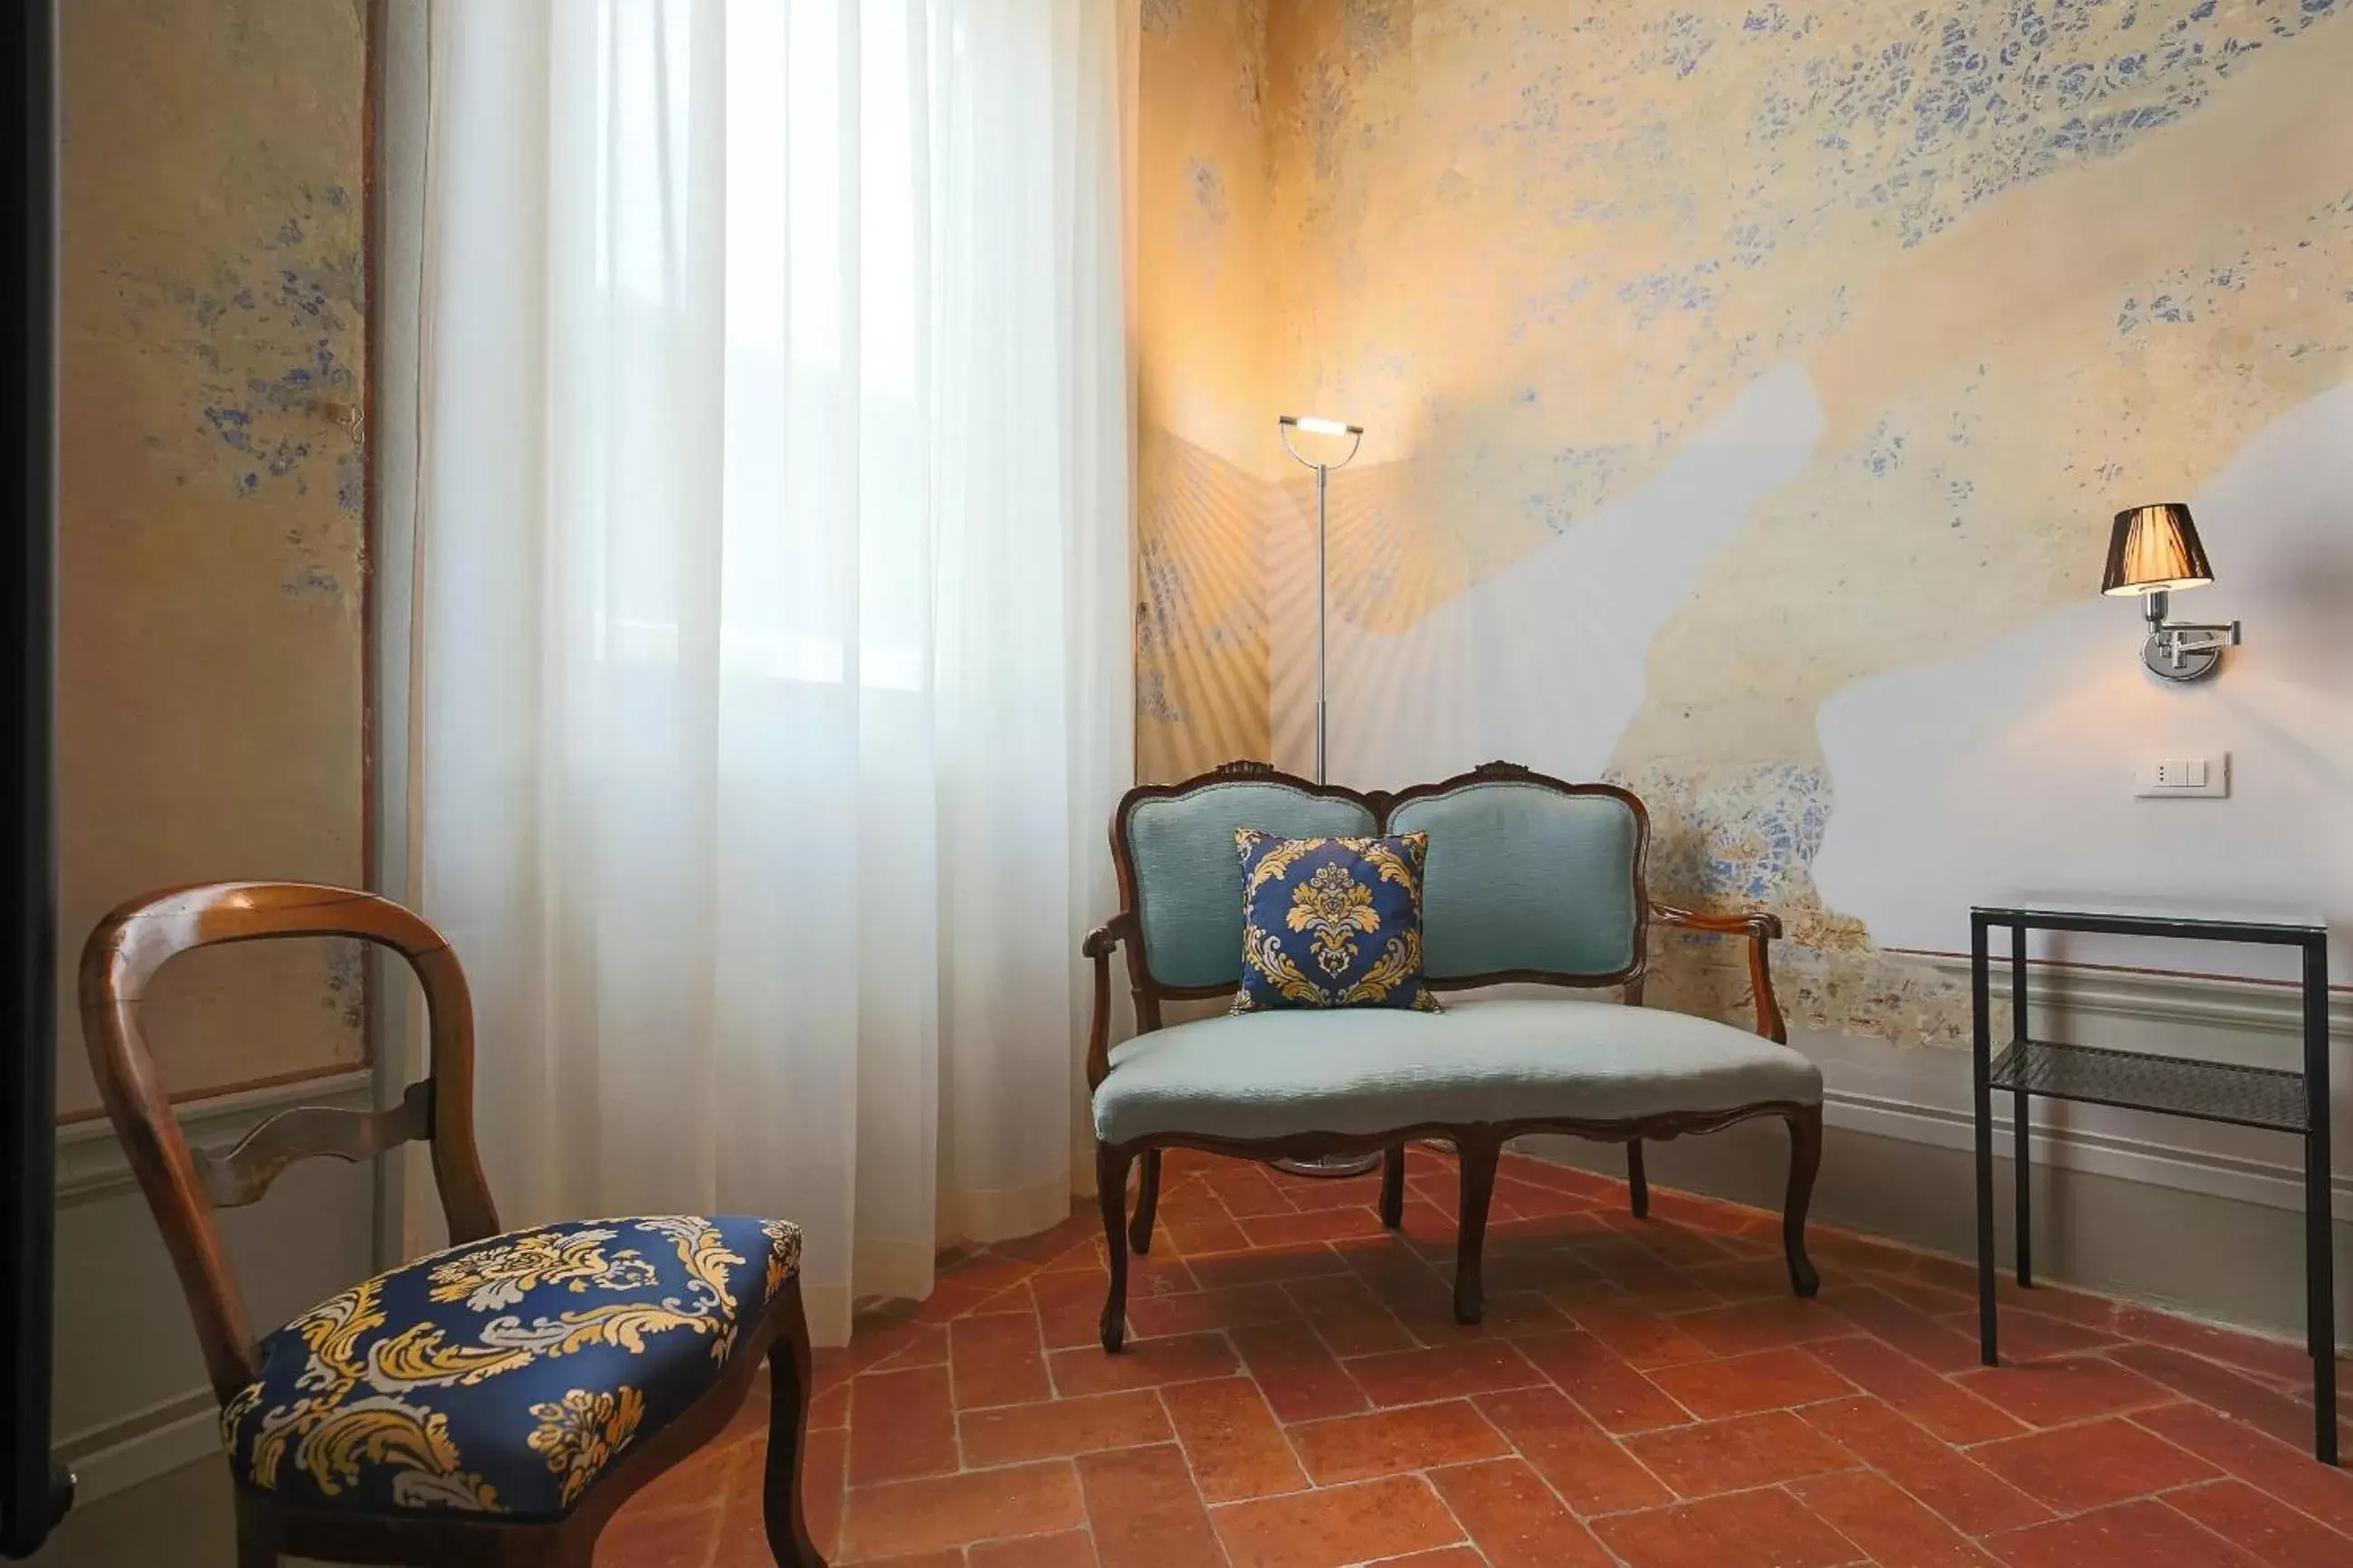 Decorative detail, Seating Area in Uffizi Harmony